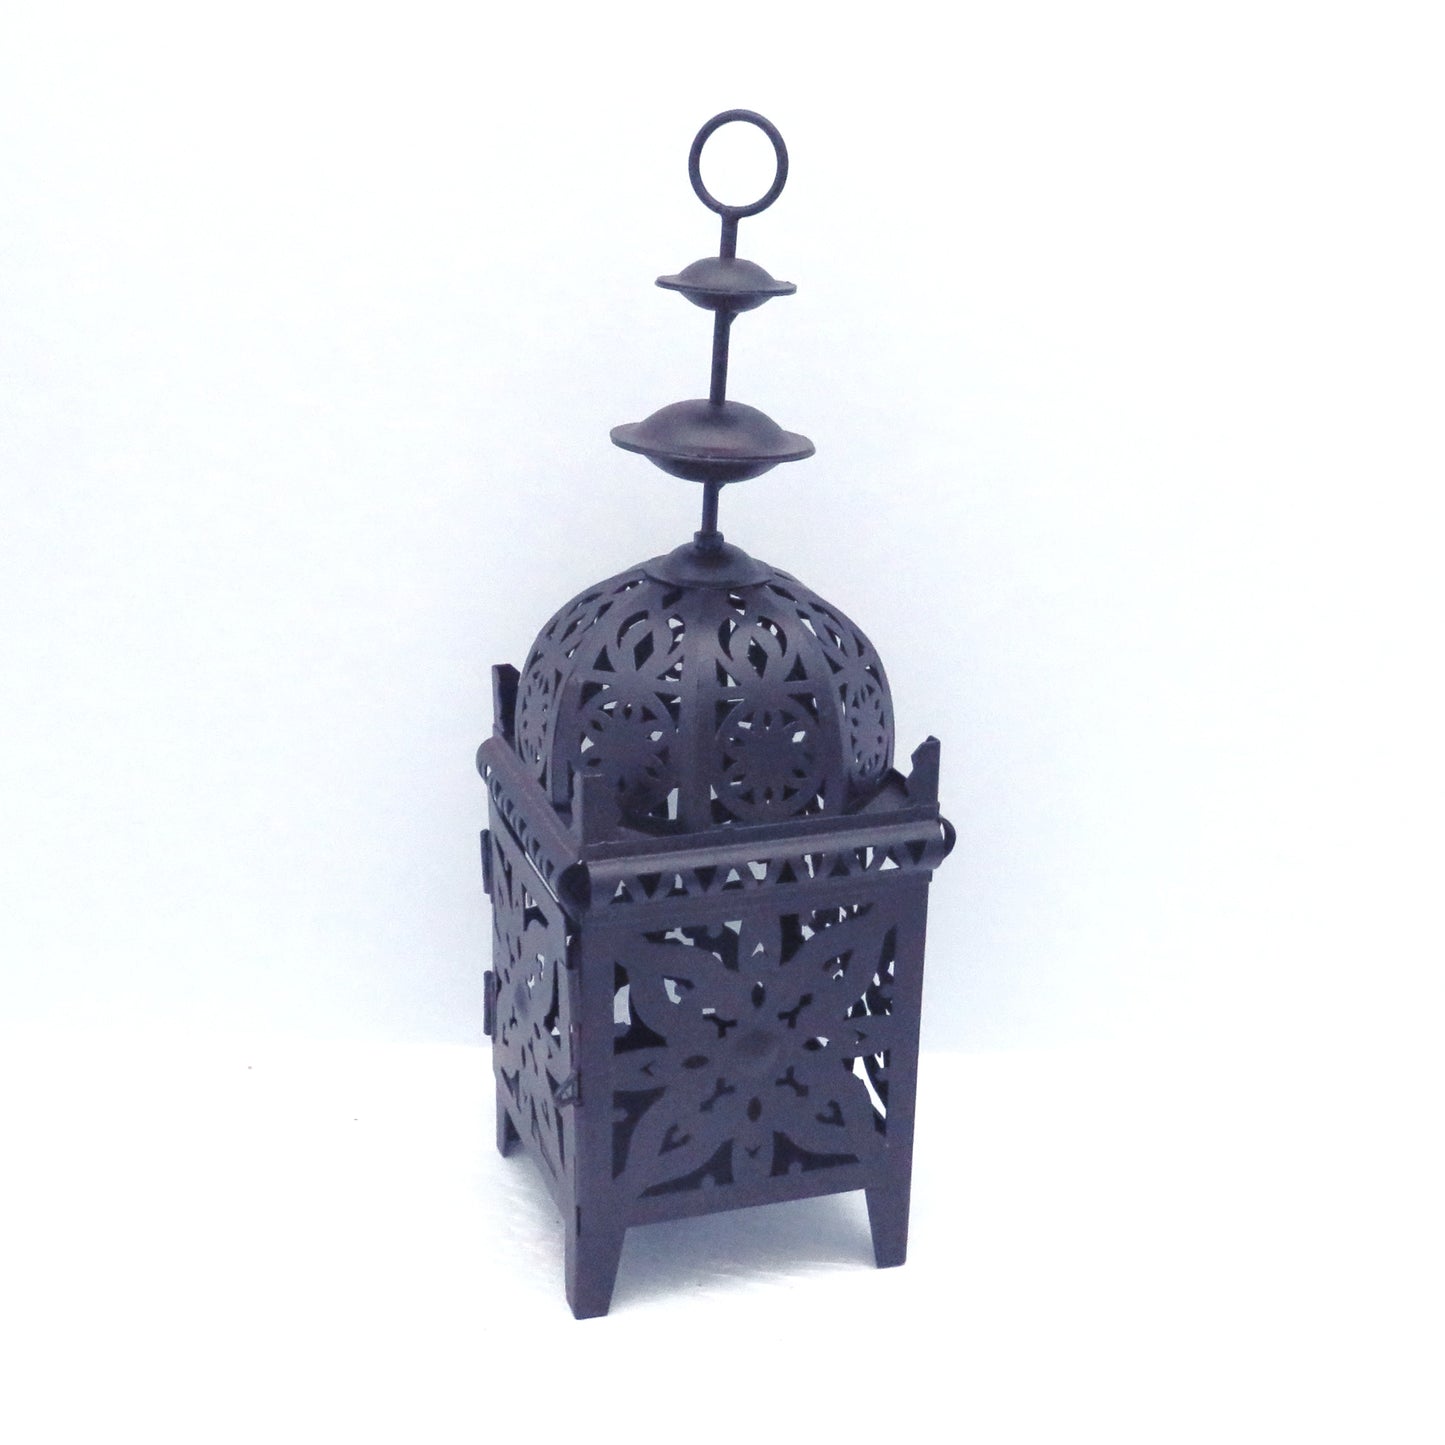 Vintage Brown Metallic Votive Candle Holder With Door and Metallic Carvings / Vintage Decor / Candle Lover Gift / Hanging Votive Holder